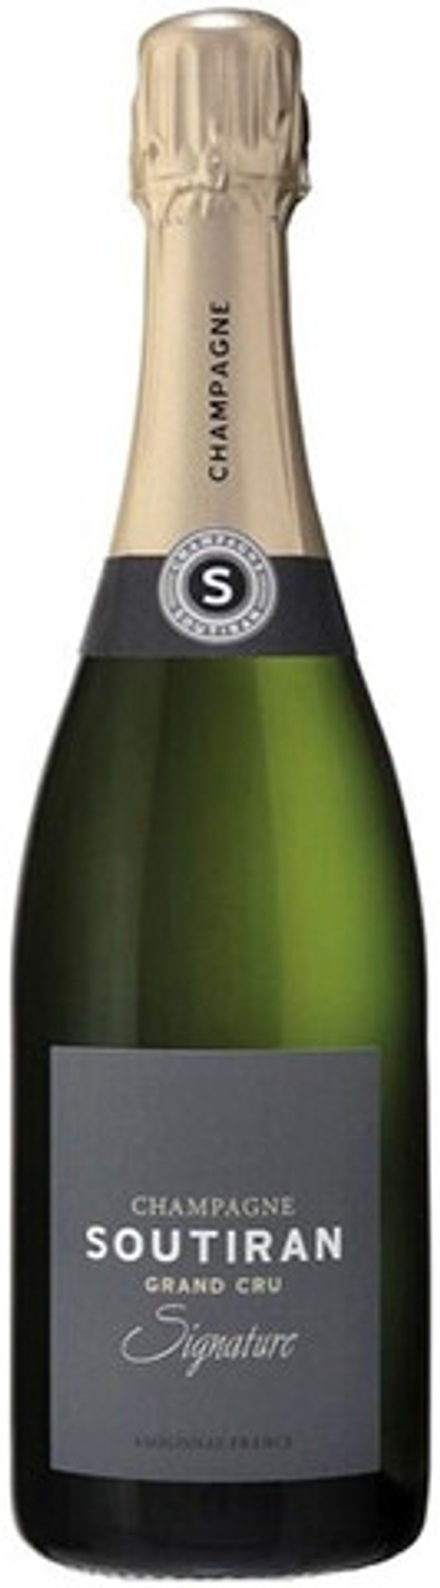 Шампанское Soutiran Cuvee Signature Grand Cru Brut, 0,75 л.